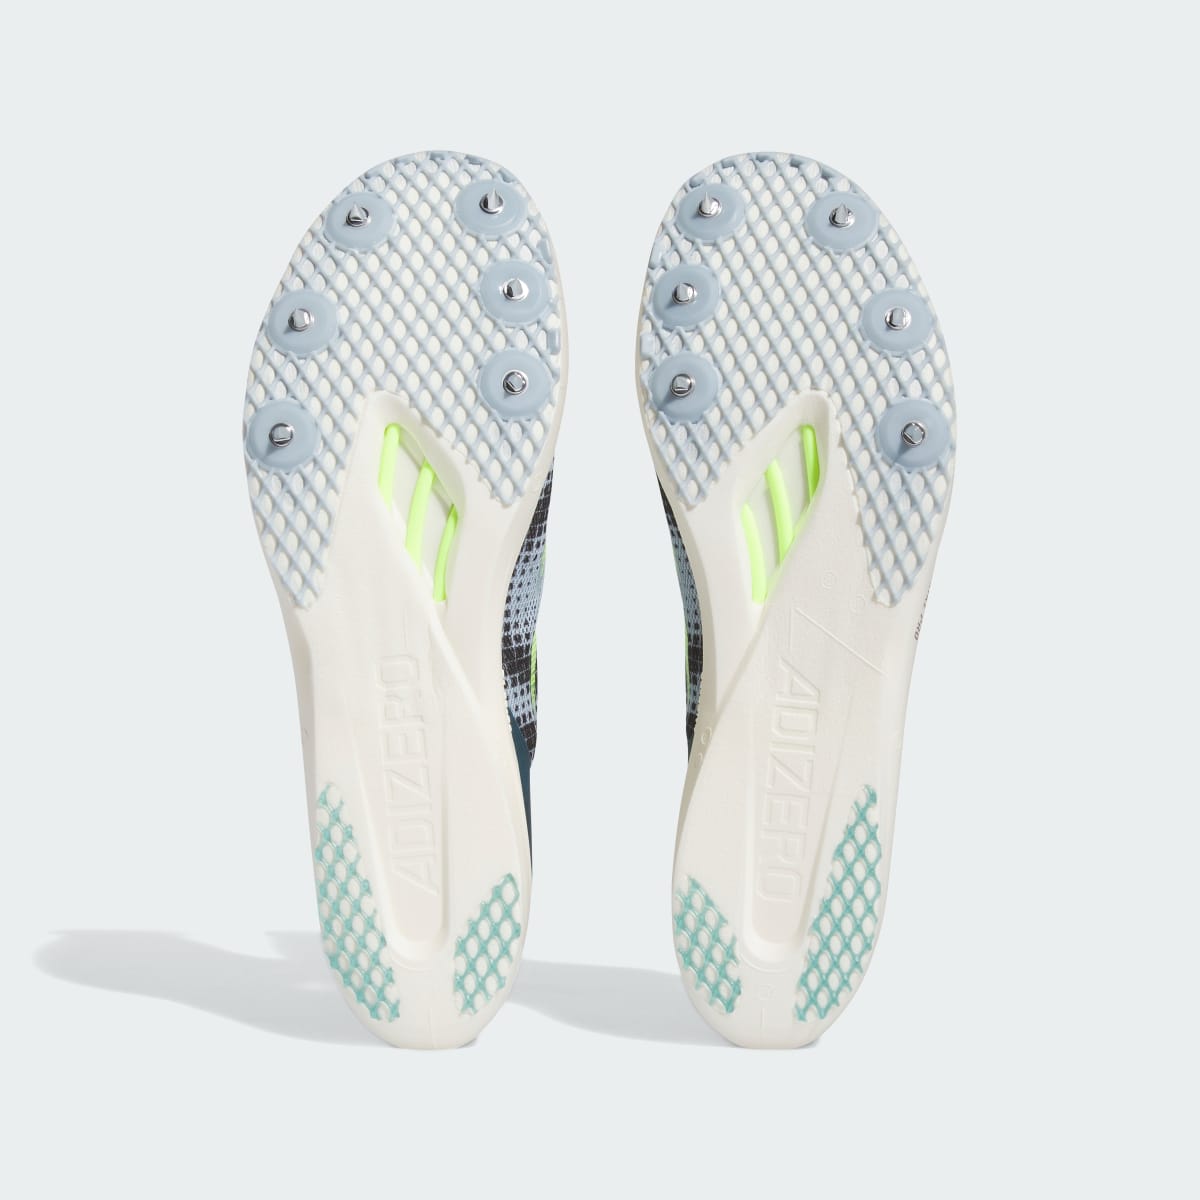 Adidas Adizero Avanti Tyo Track and Field Lightstrike Shoes. 4